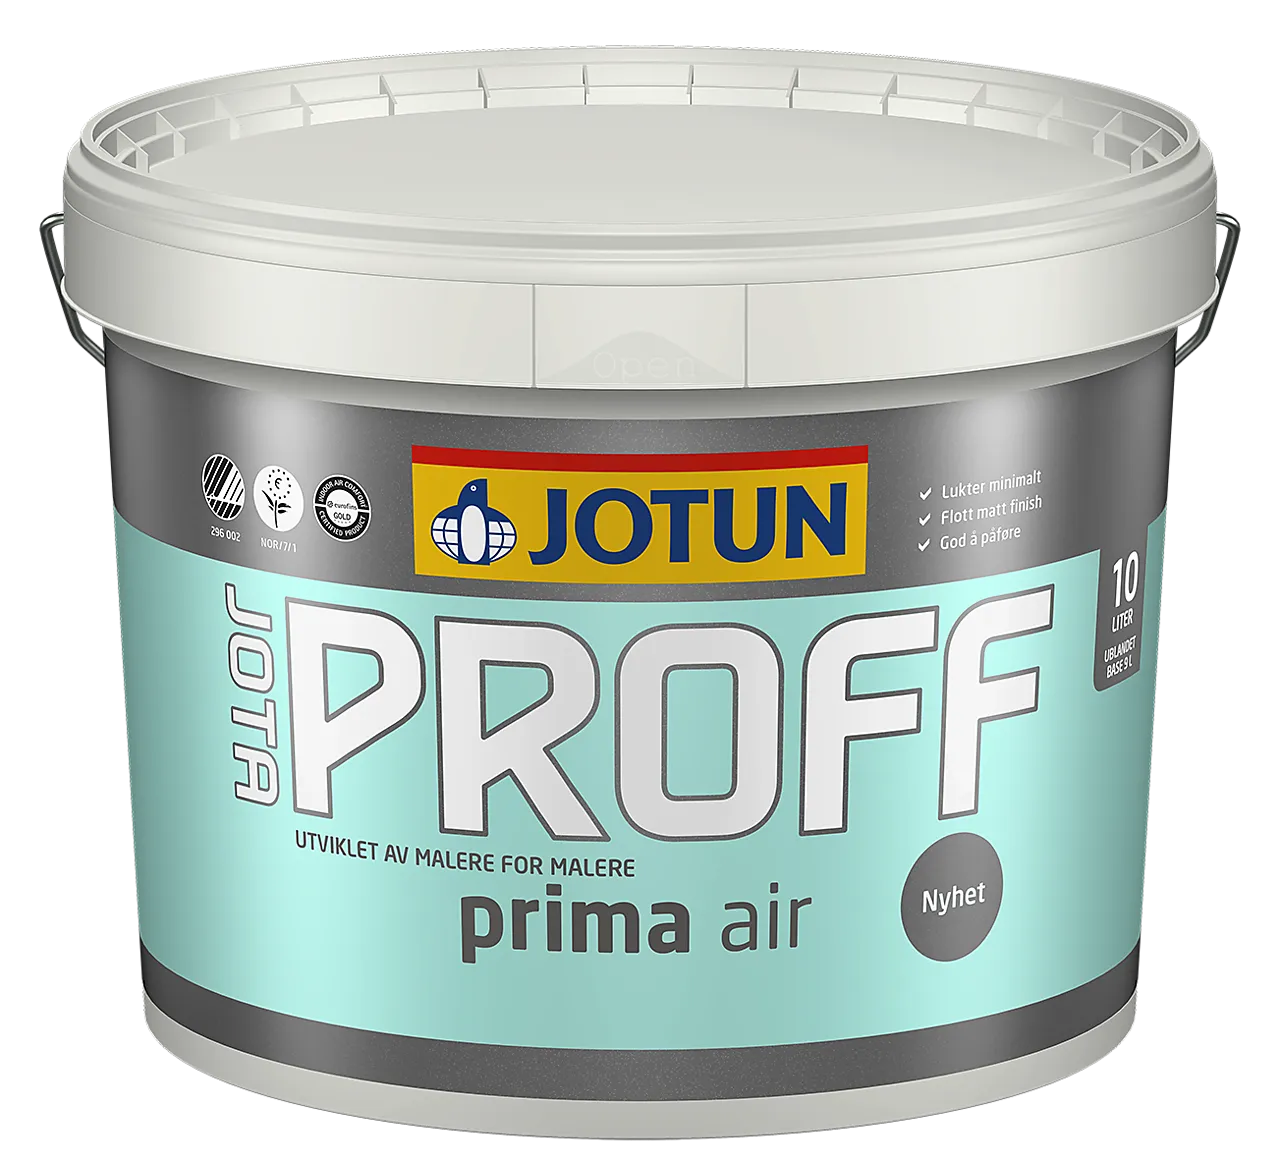 Jotaproff Prima Air a-base 9 liter